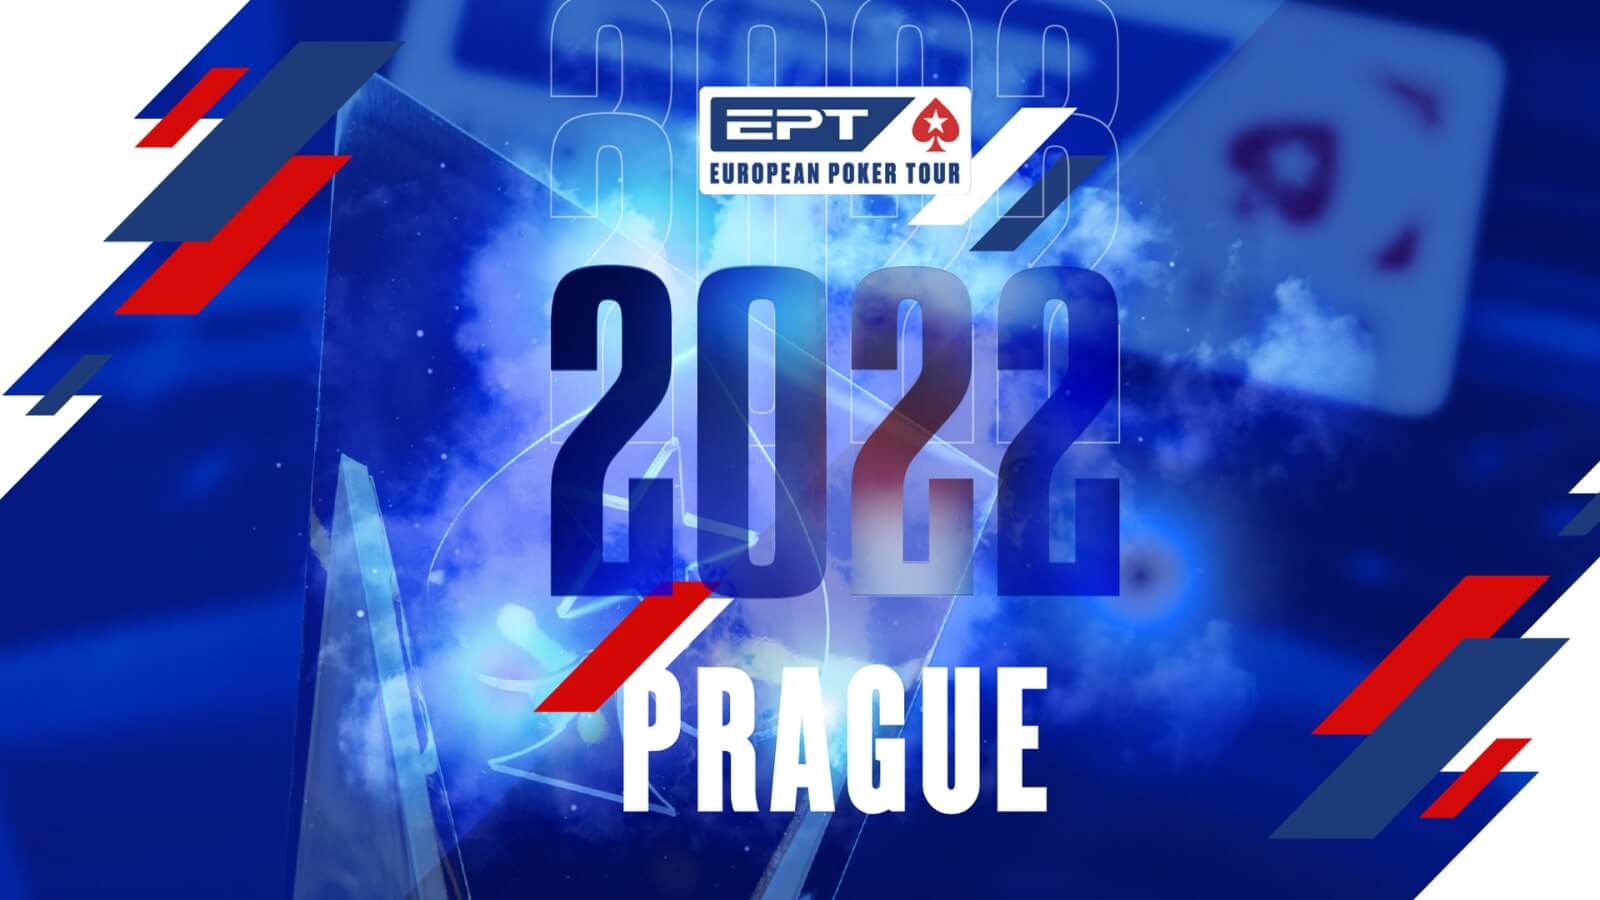 ept_prague_2022